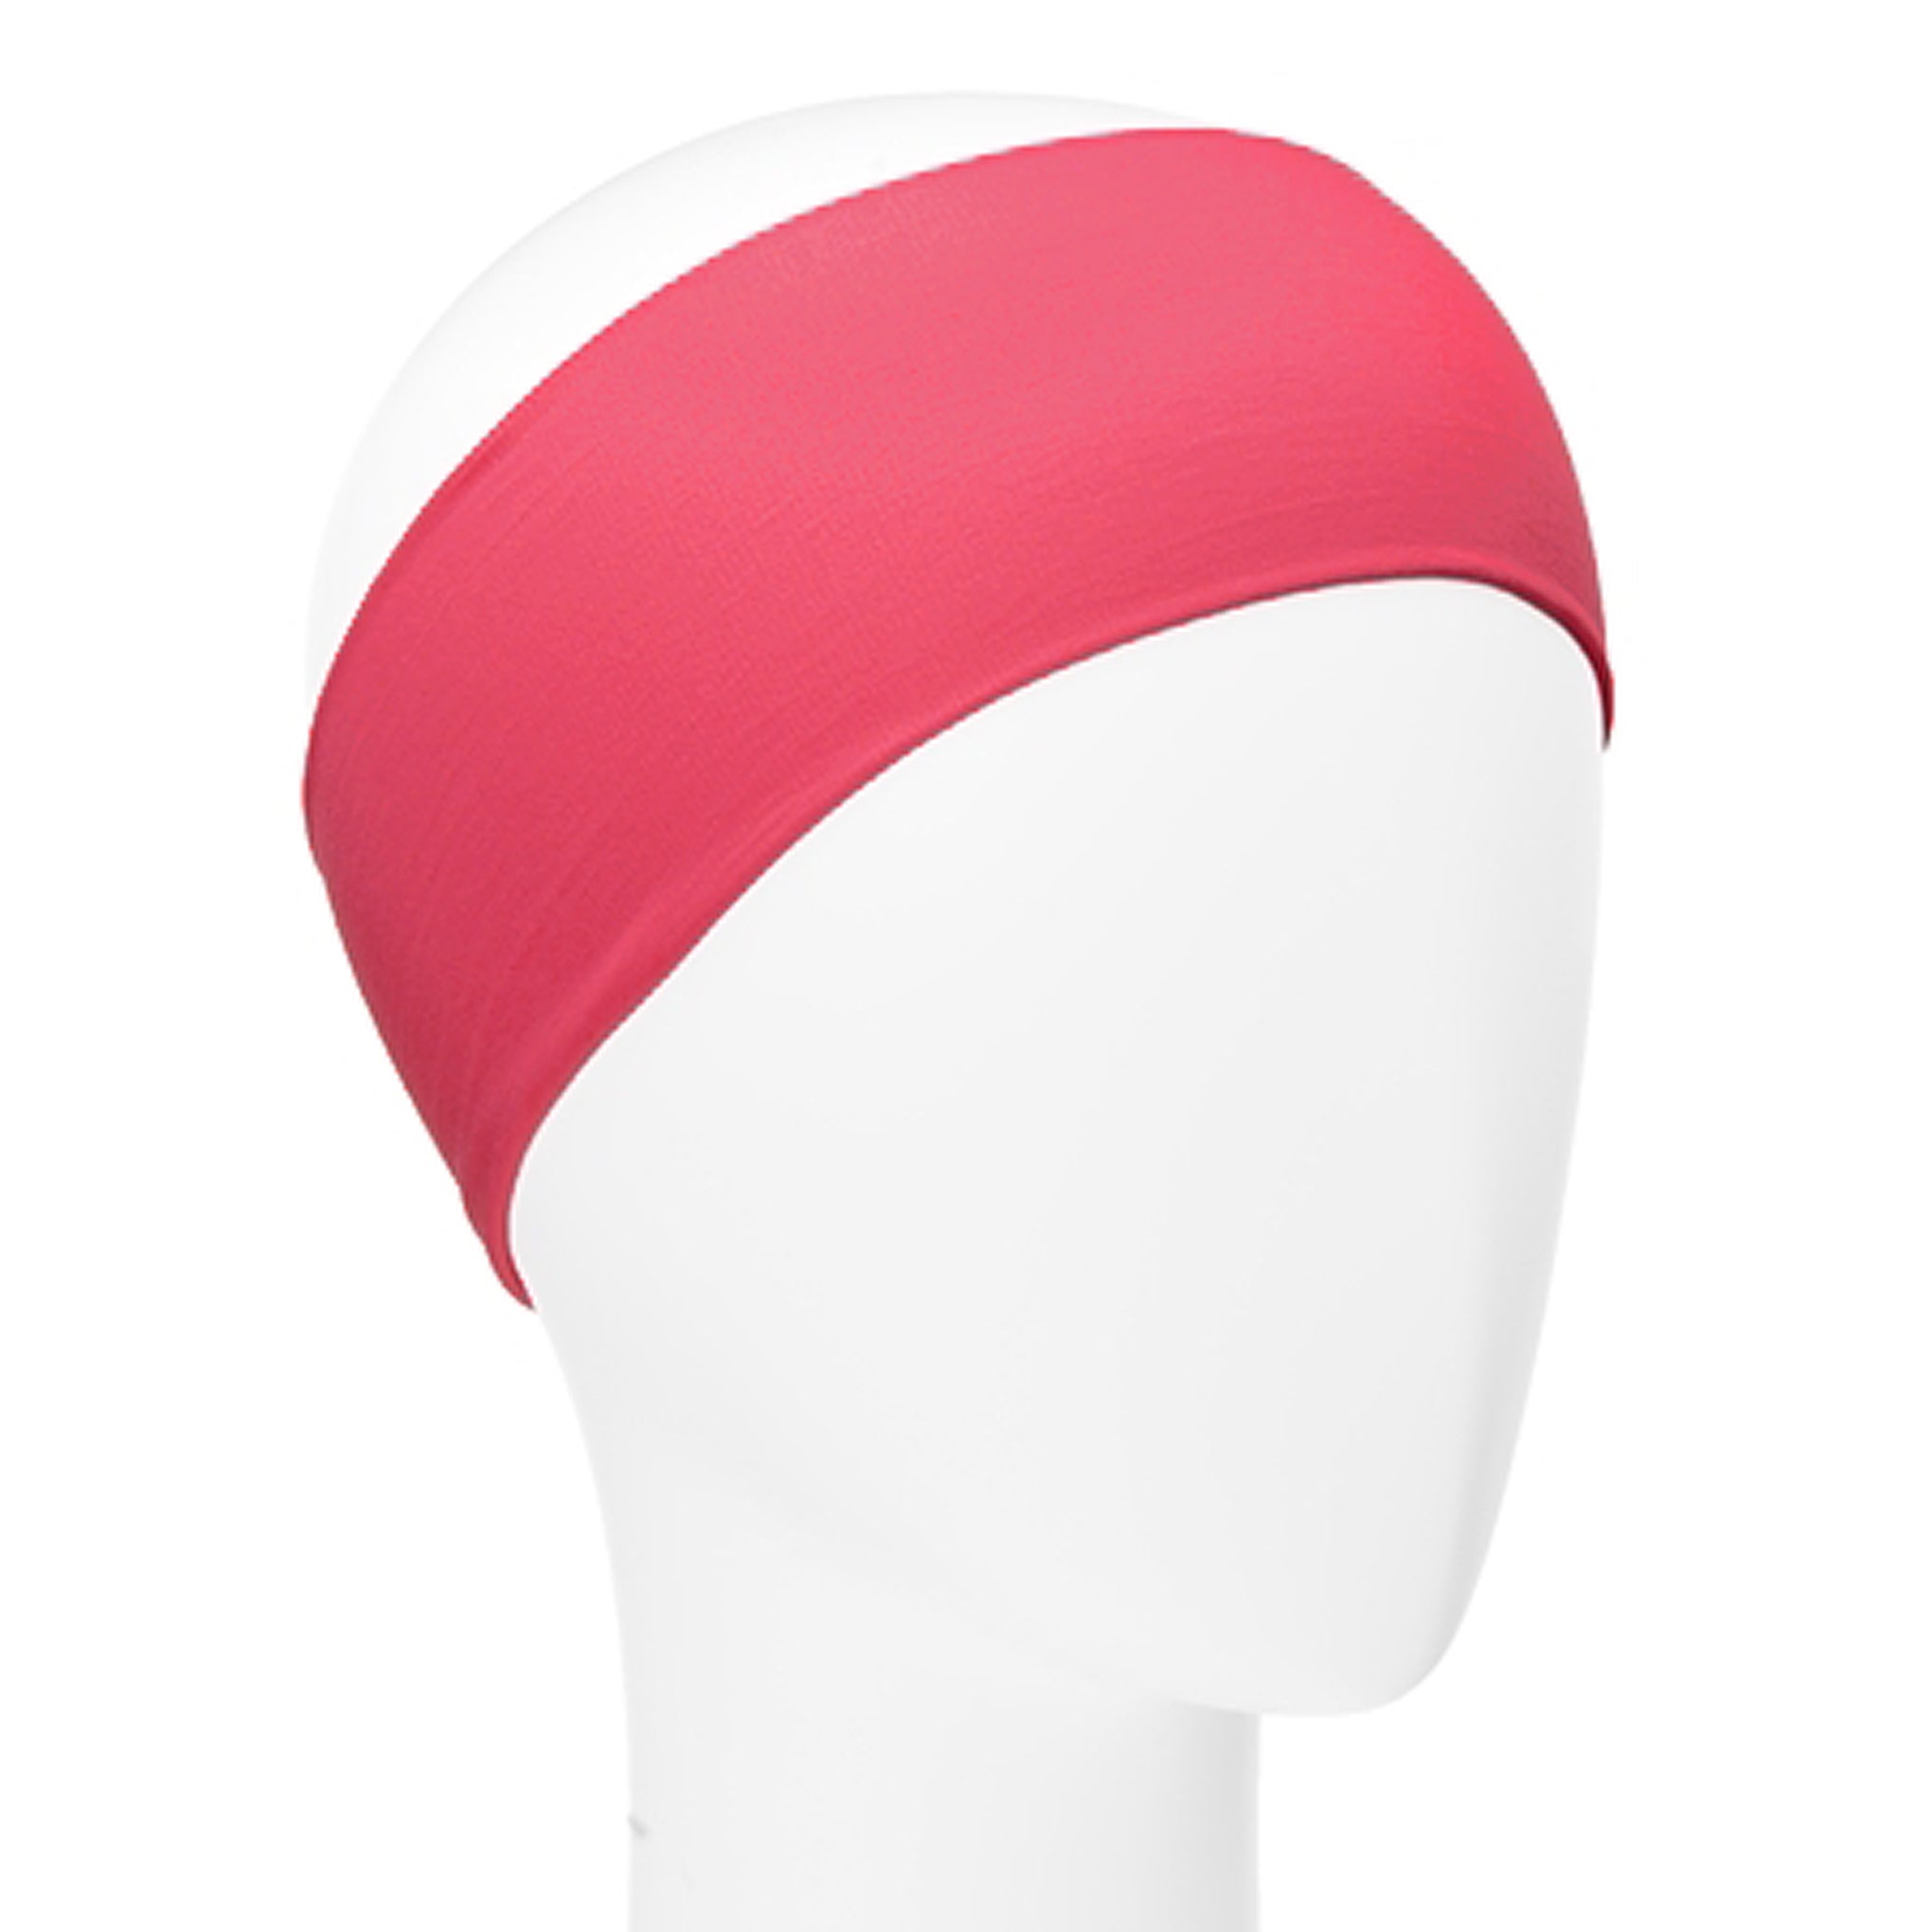 L. Erickson Italian Bandeau Stretch Headband in Bright Guava Pink